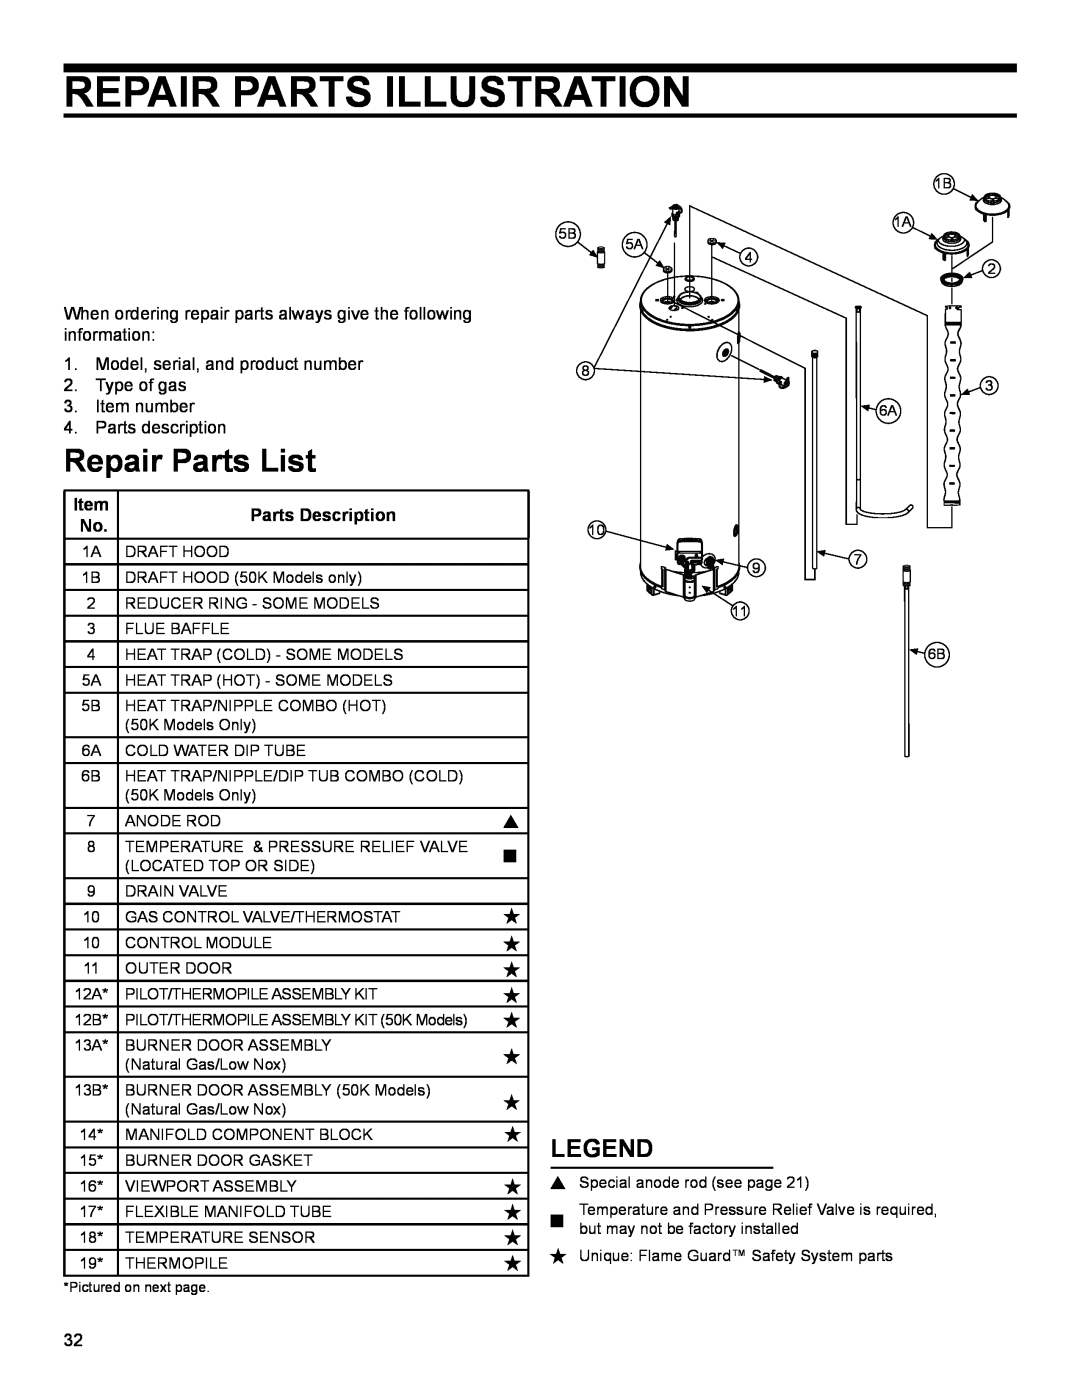 American Water Heater 318935-003 installation instructions Repair Parts Illustration, Repair Parts List 